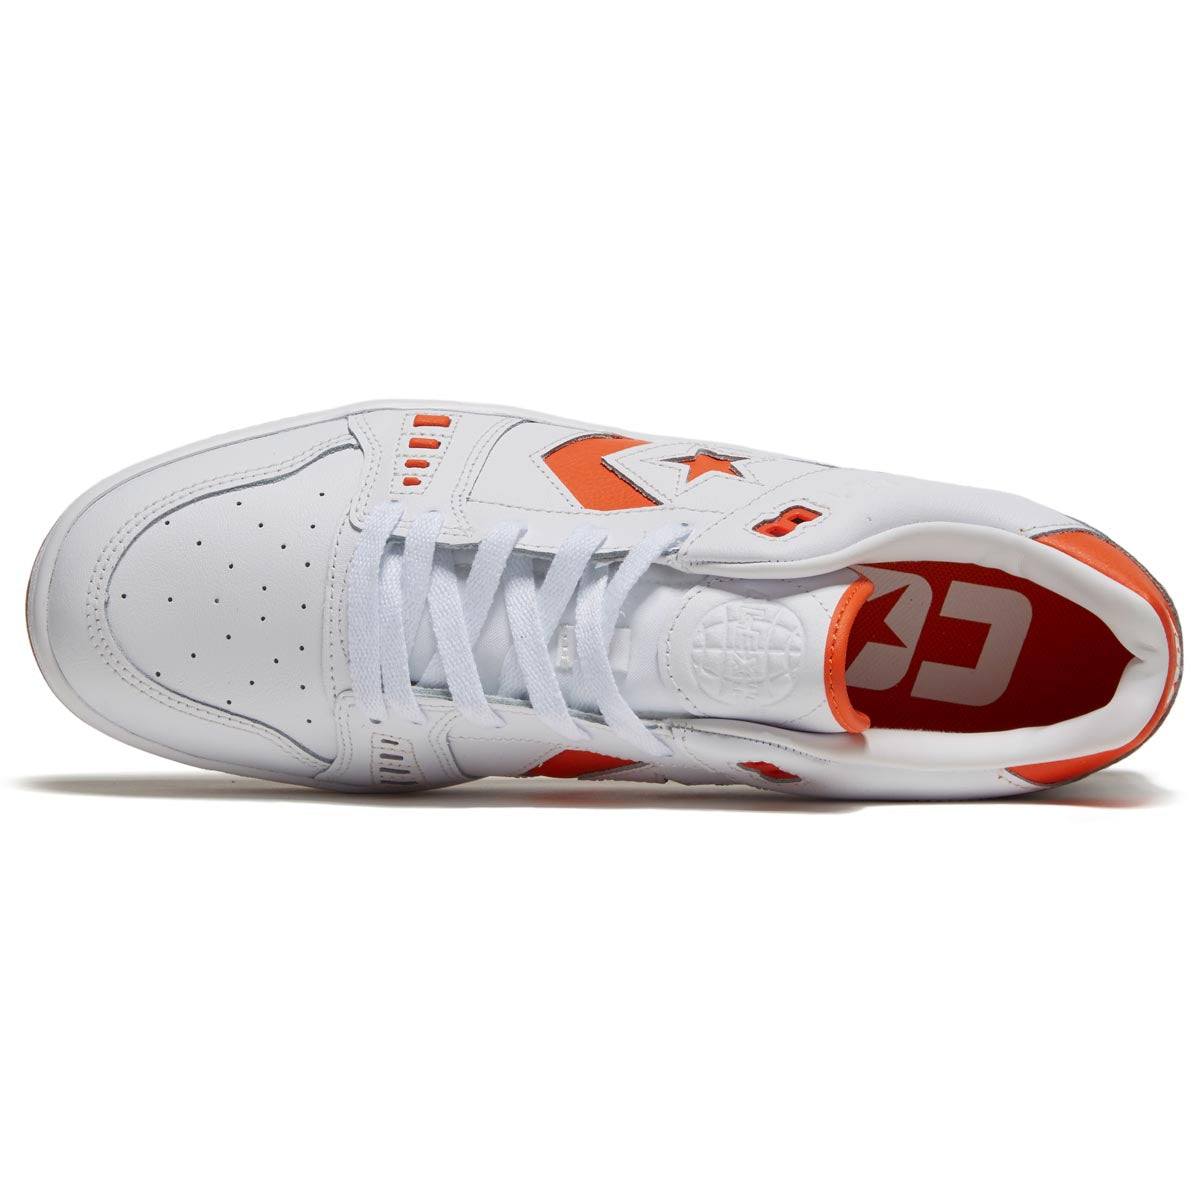 Converse AS-1 Pro Leather Ox Shoes - White/Orange/White image 3